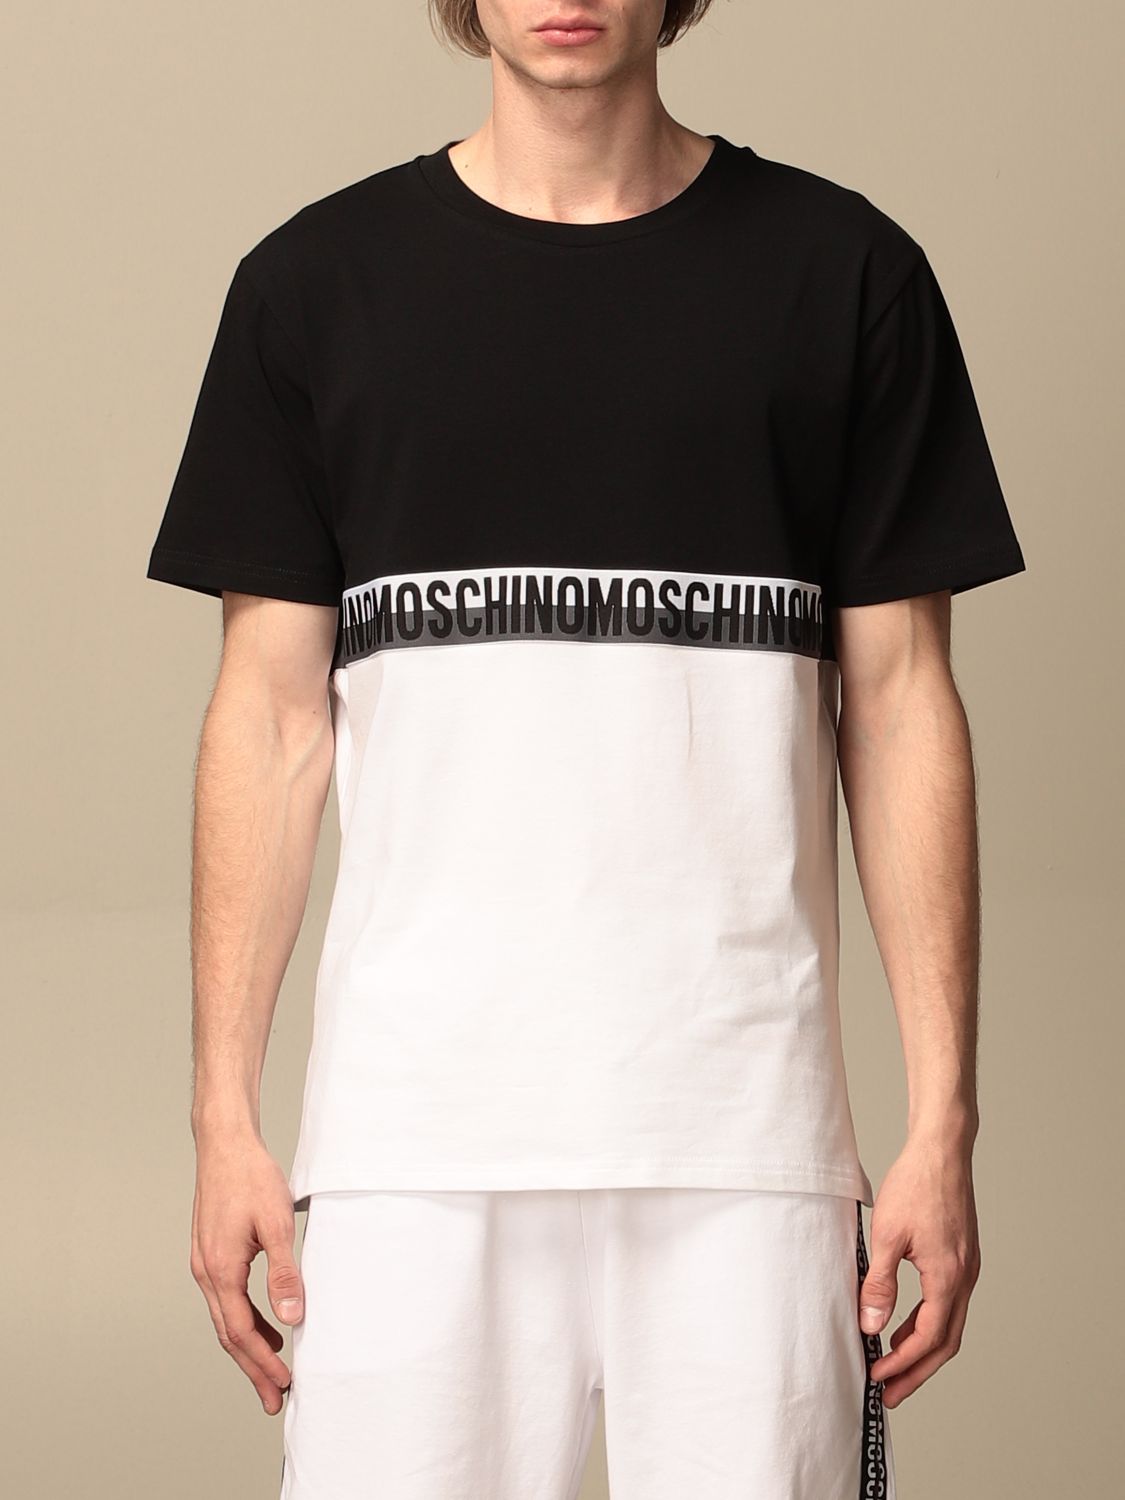 MOSCHINO UNDERWEAR: T-shirt with logoed band - Black | Moschino ...